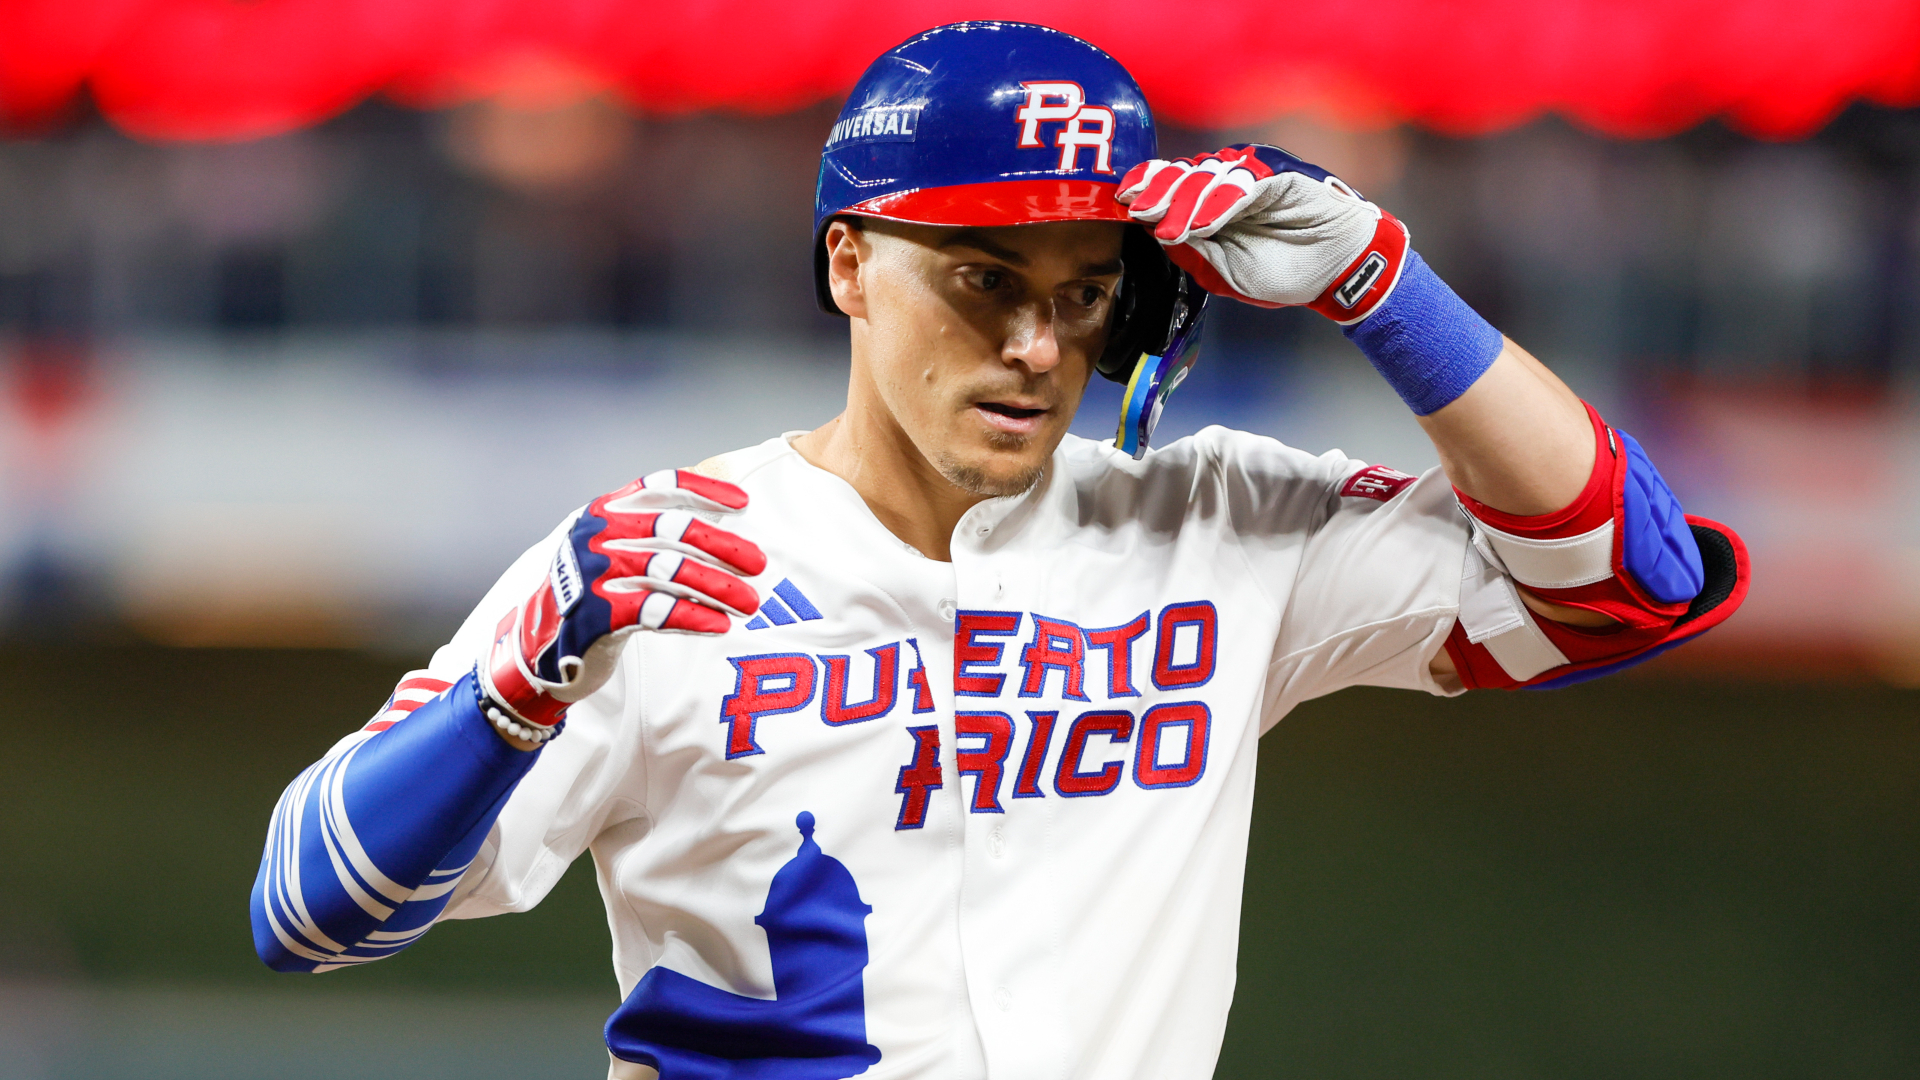 Enrique Hernández faces Red Sox as member of Team Puerto Rico